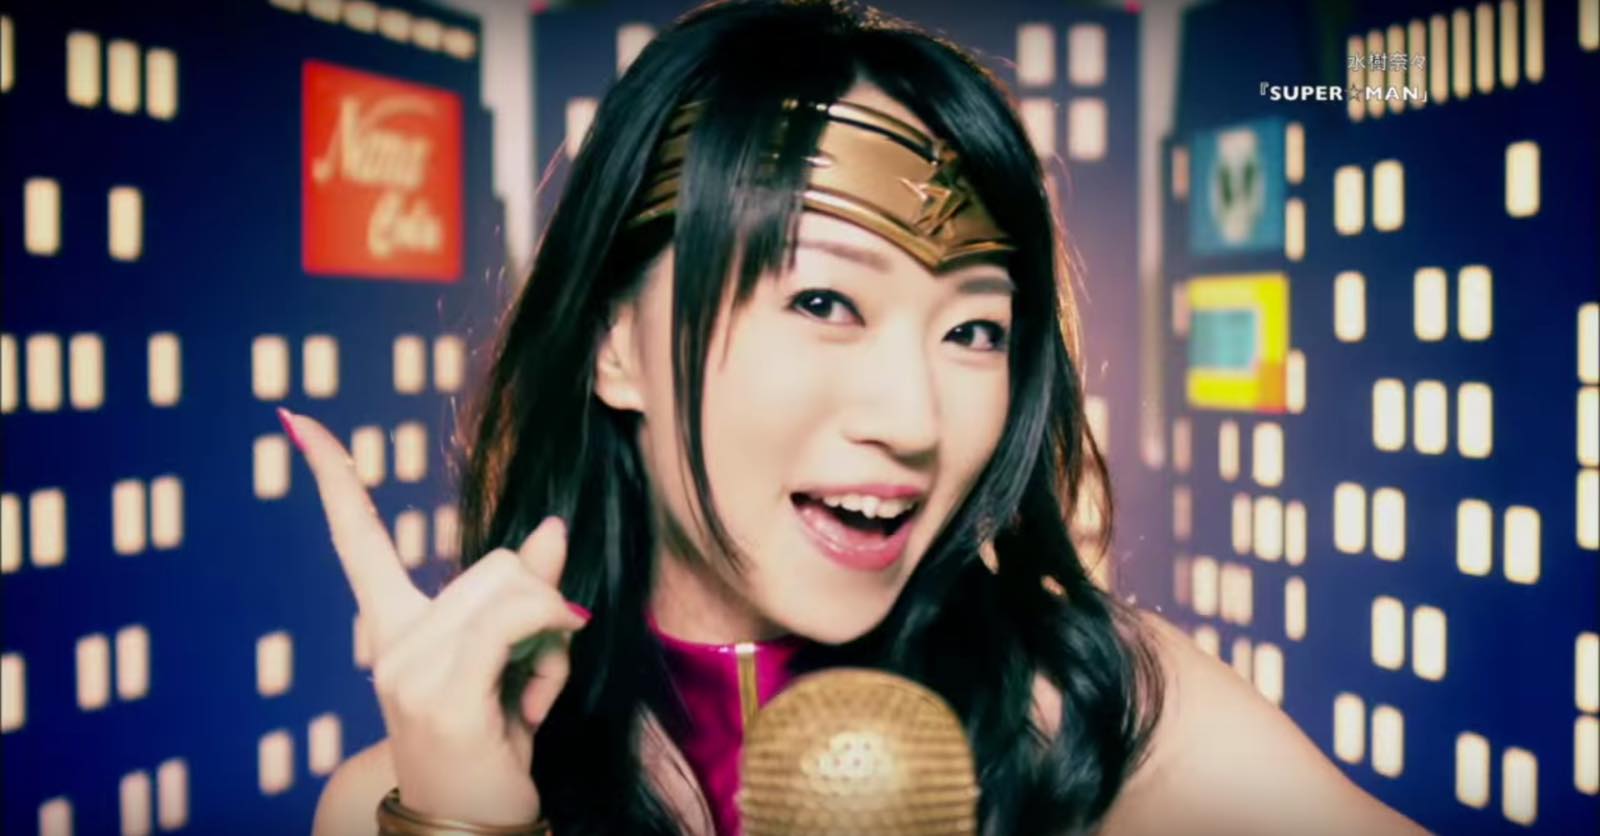 Nana Mizuki Shows off Super Disco Powers in the MV for “SUPER☆MAN”!